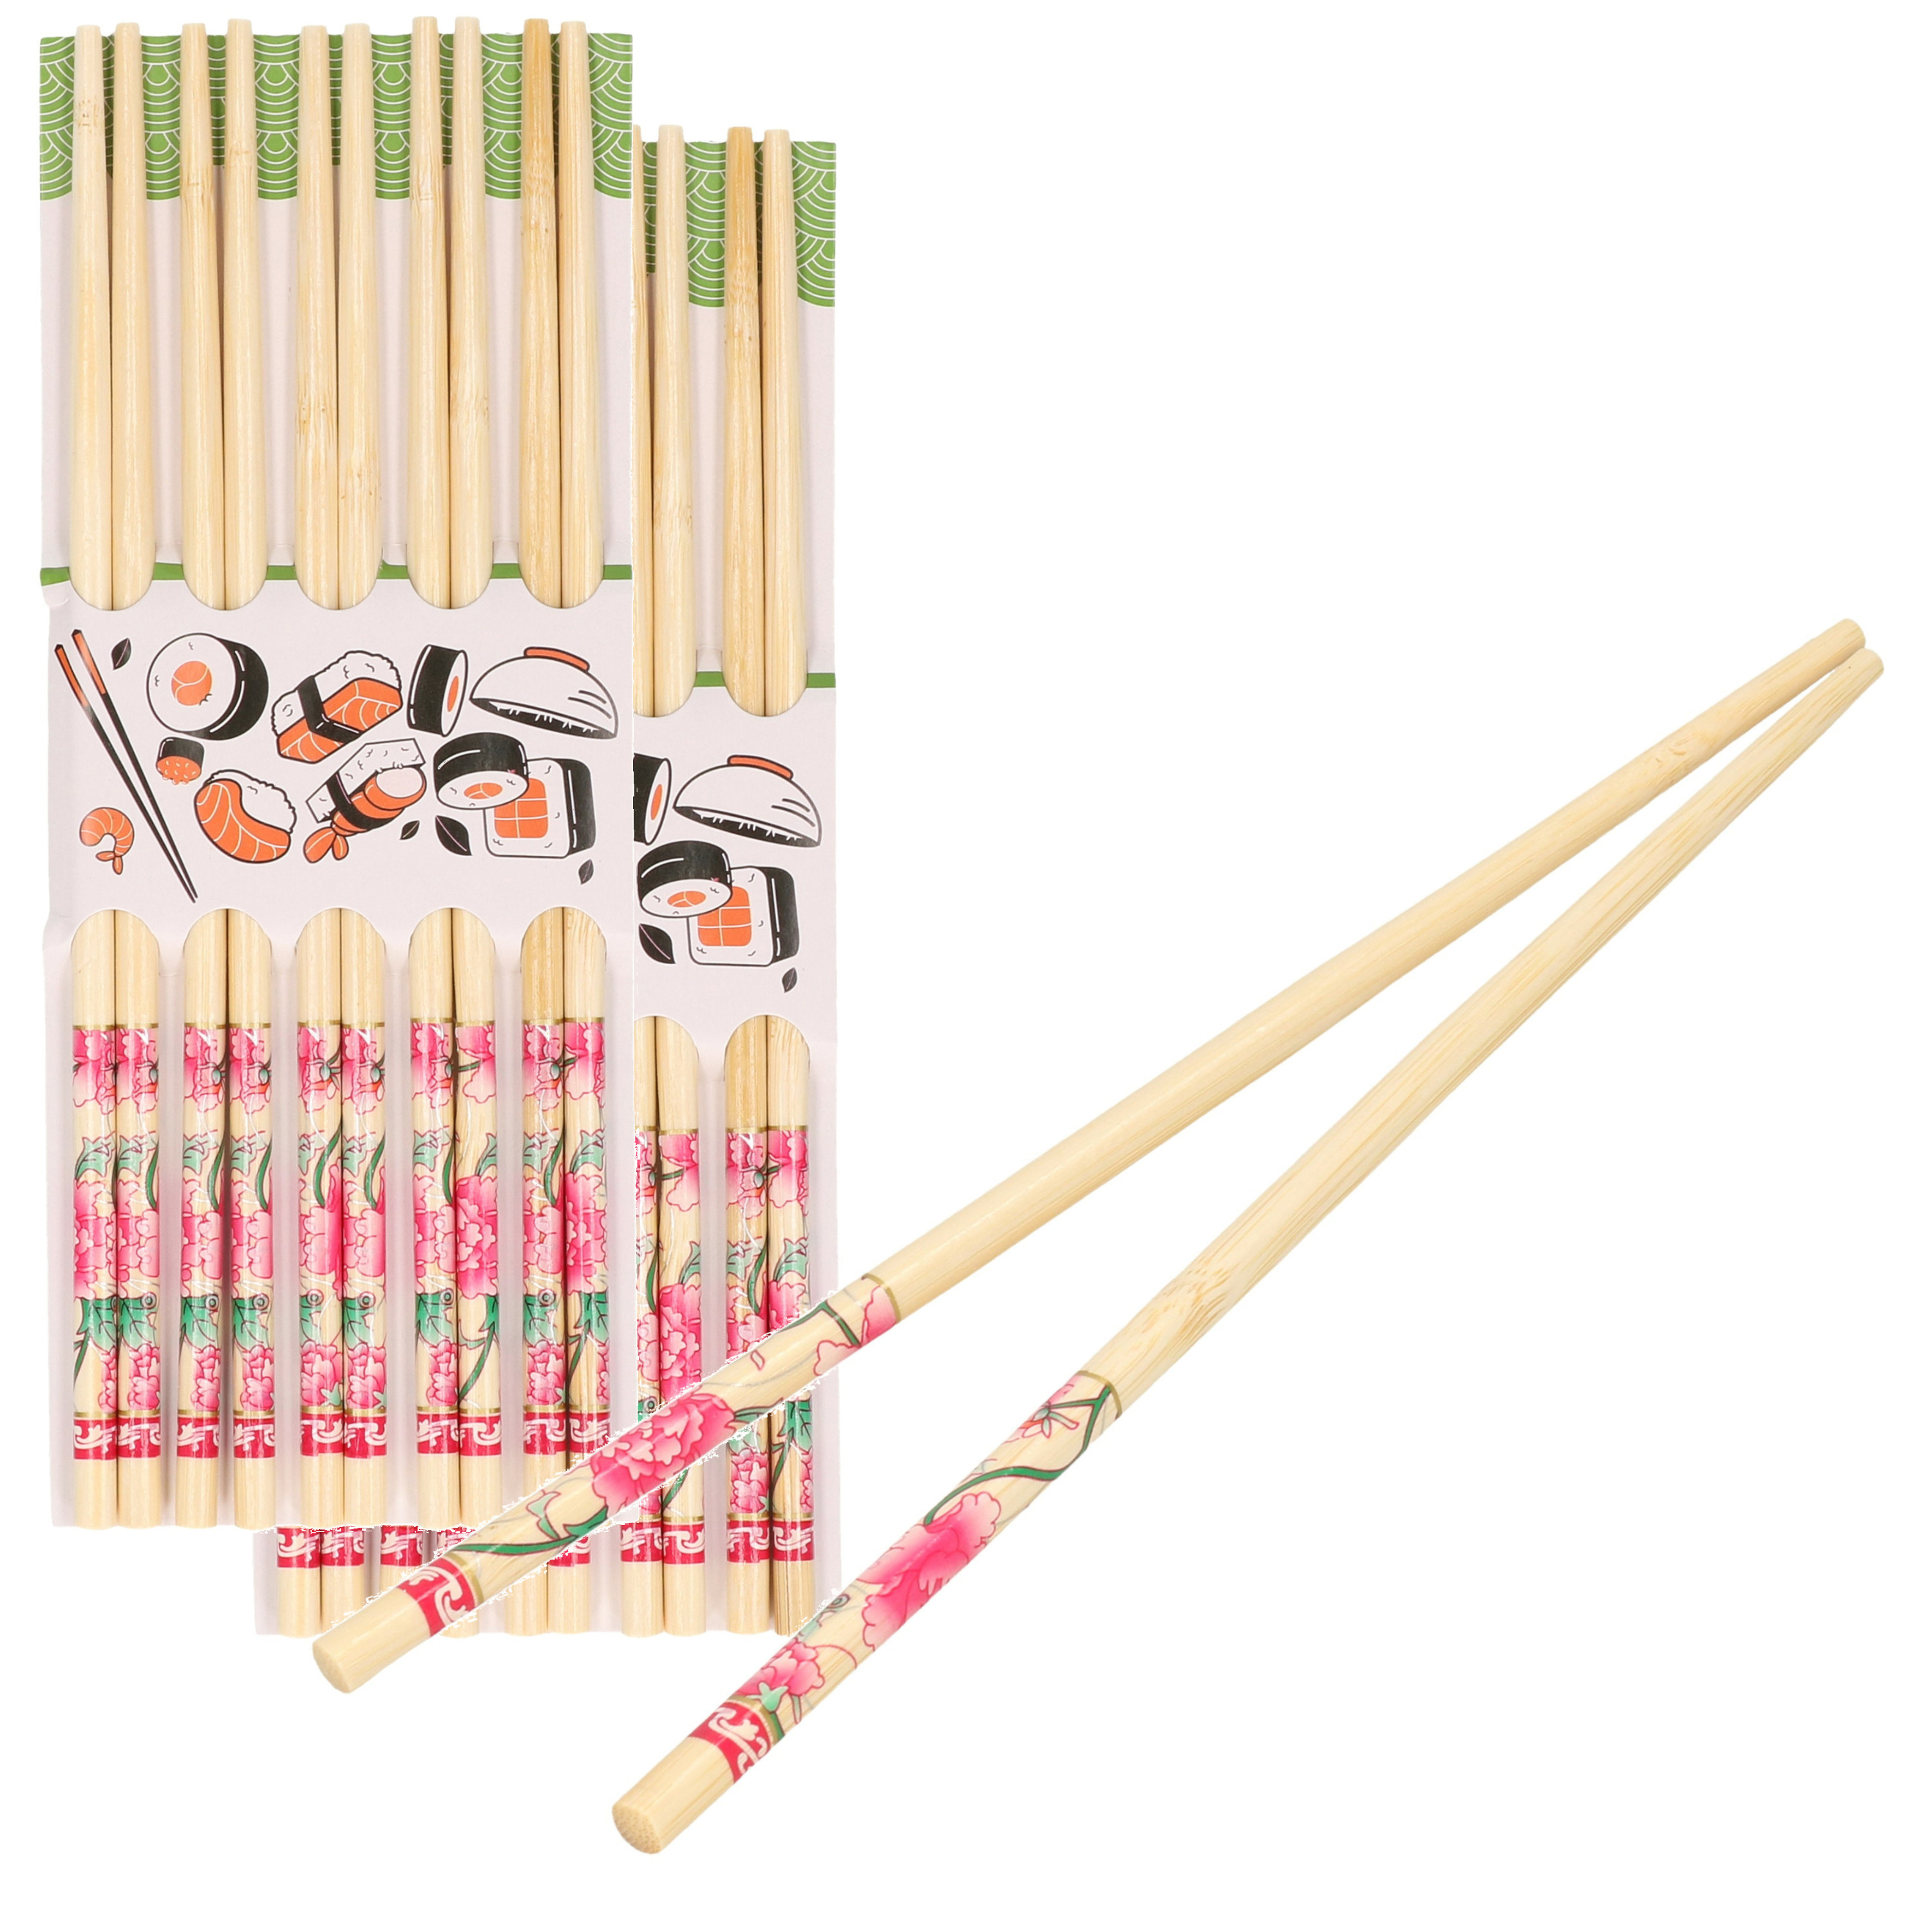 Sushi eetstokjes 40x setjes bamboe hout roze bloemen print 24 cm